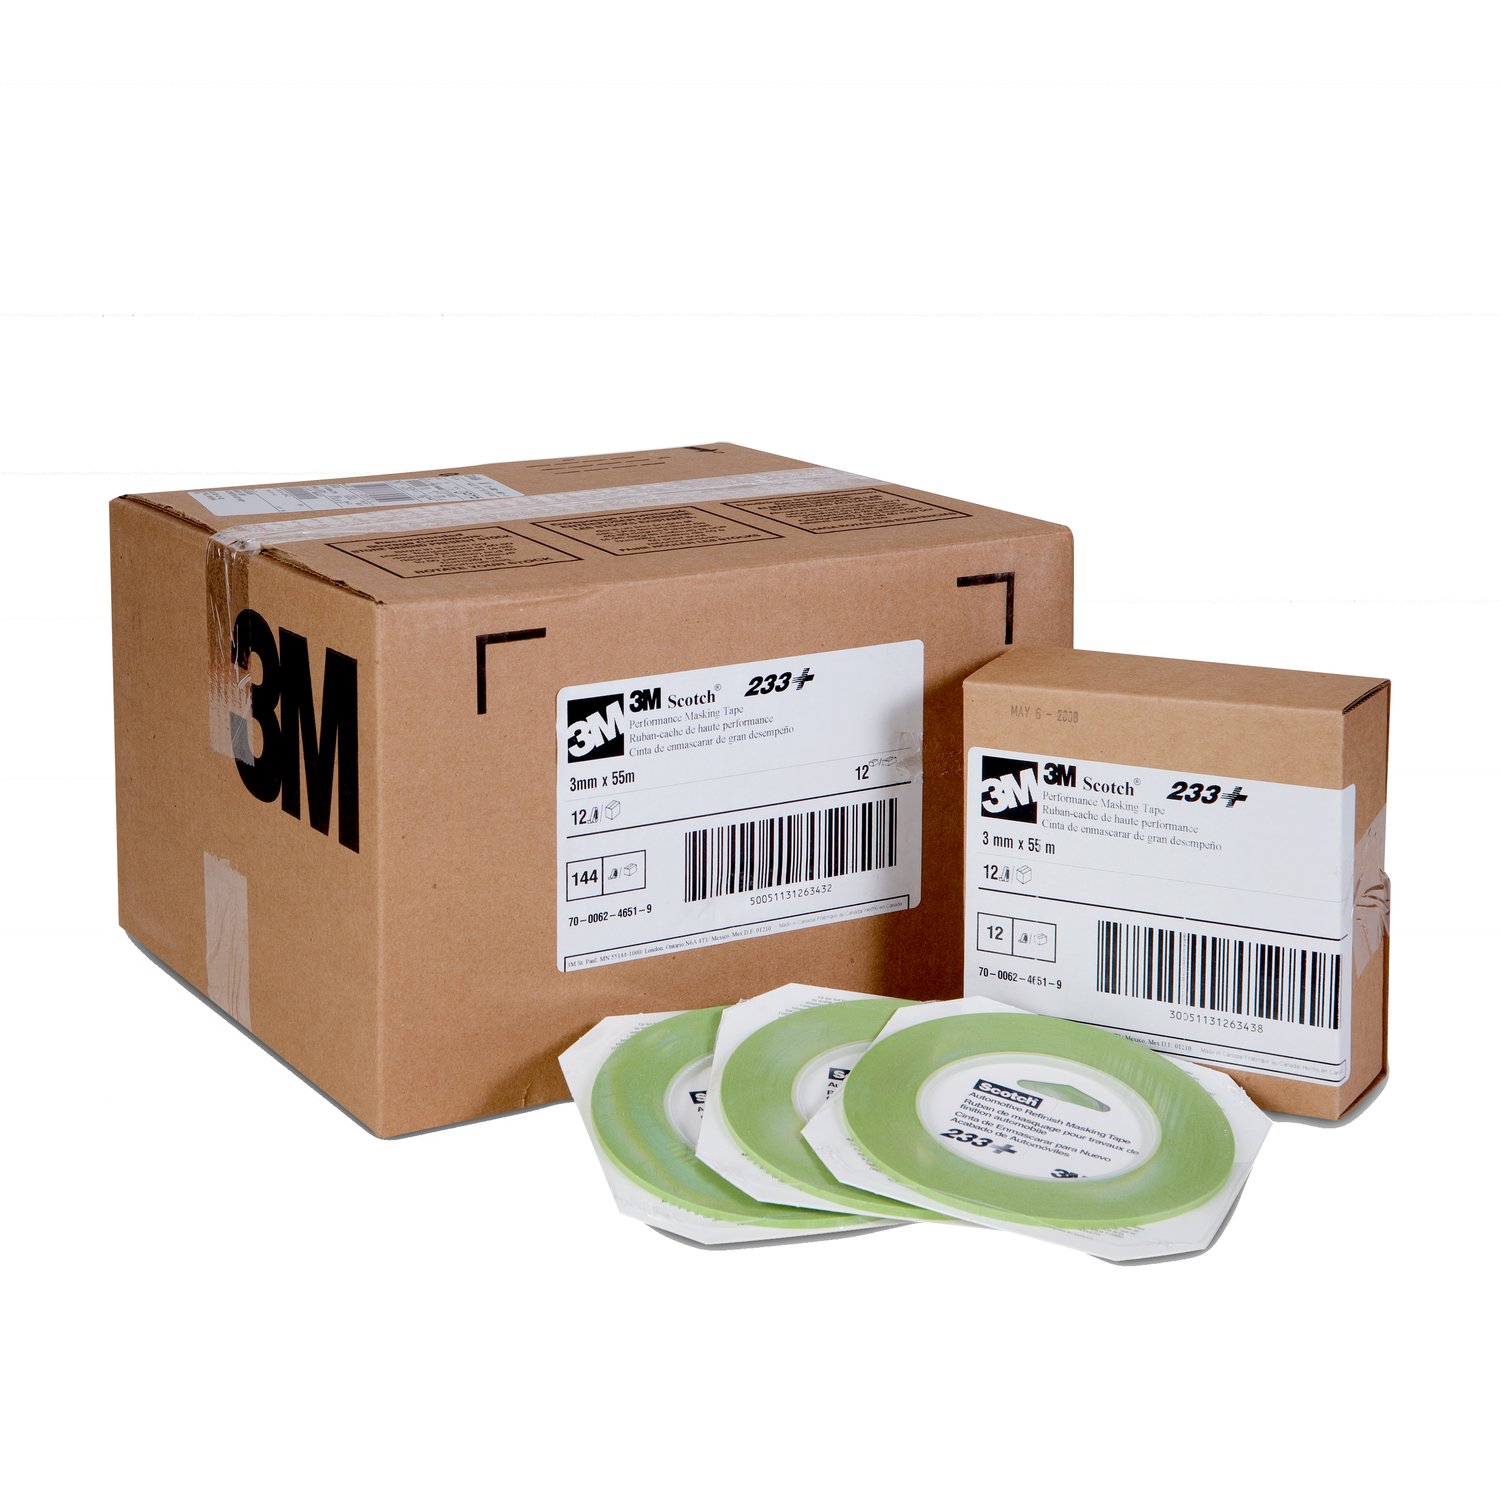 7000123778 - Scotch Performance Masking Tape 233+ 26343, Green, 3 mm x 55 m, 12/Case